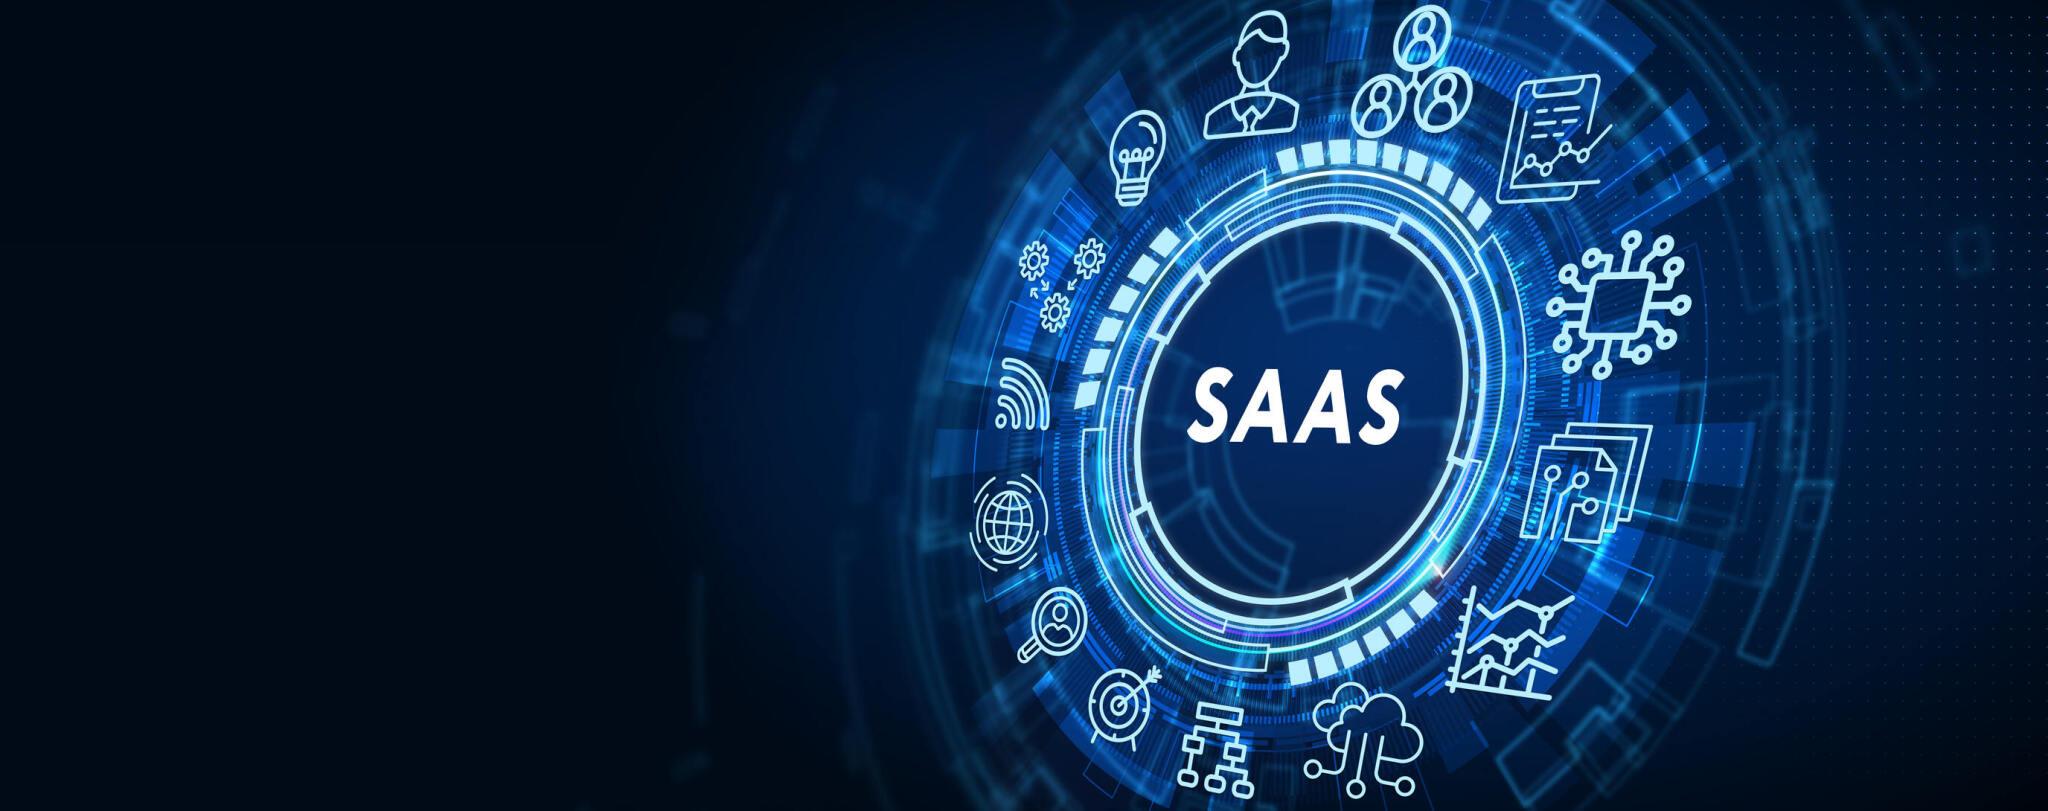 SaaS Company: Transforming Industries through Cloud Innovation: Transforming Industries through Cloud Innovation